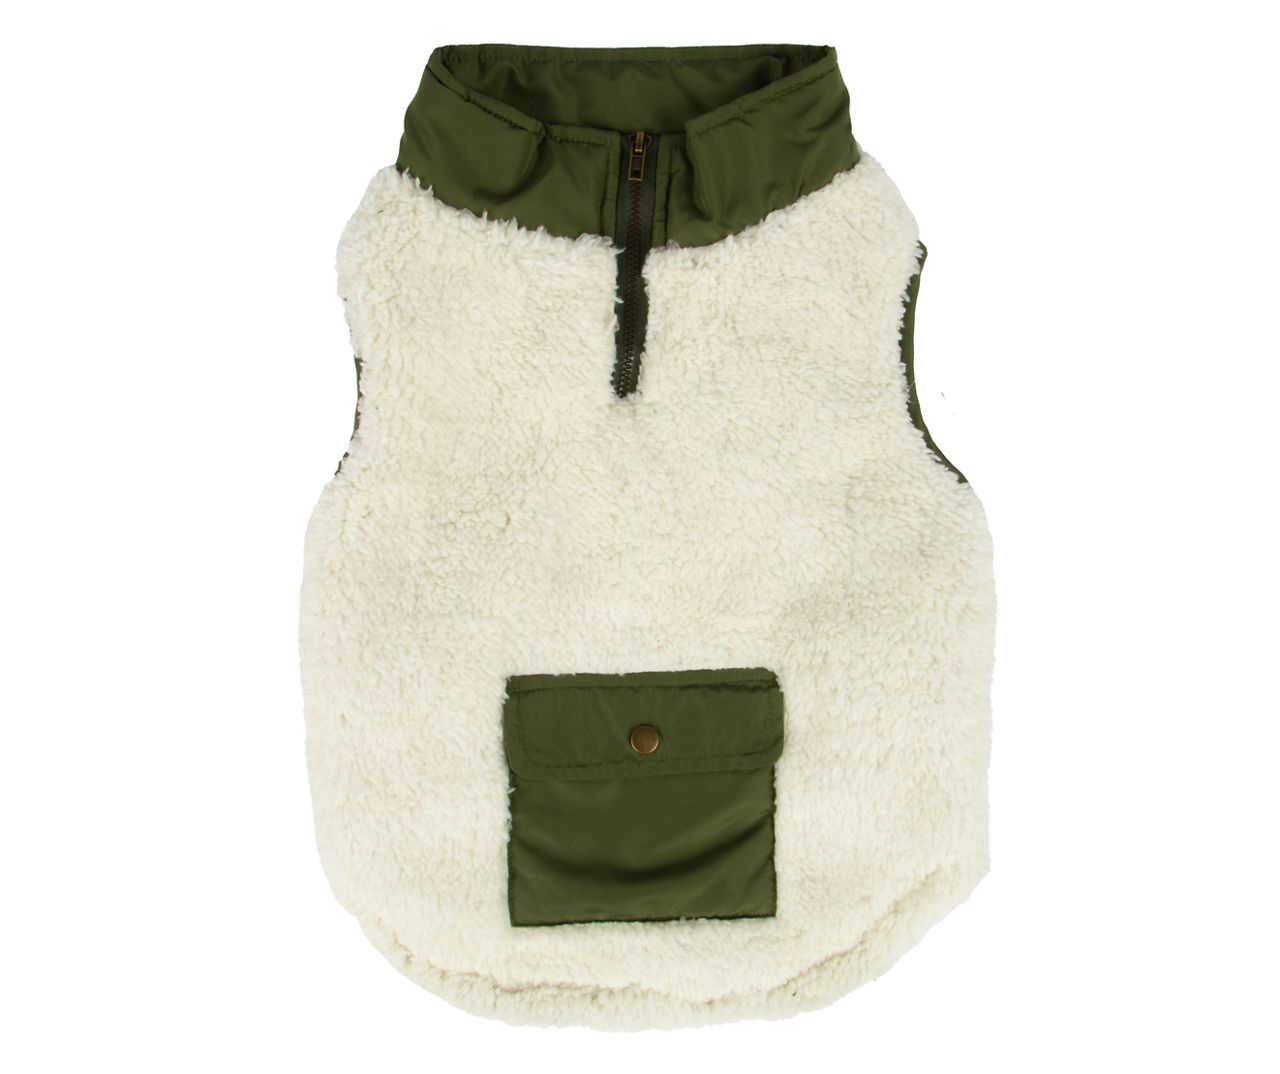 Pet X-Large White & Green Fuzzy Military Jacket